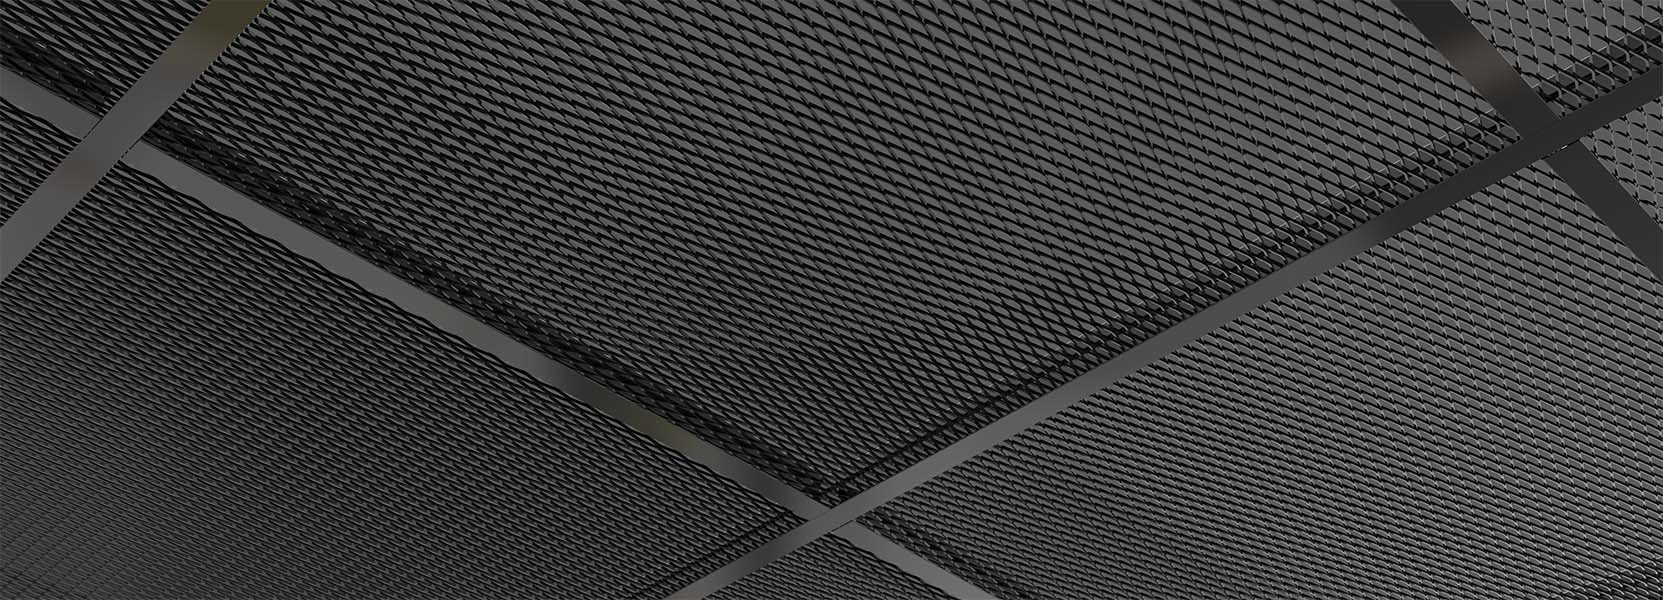 Zentia DecoMesh - black grid and tile